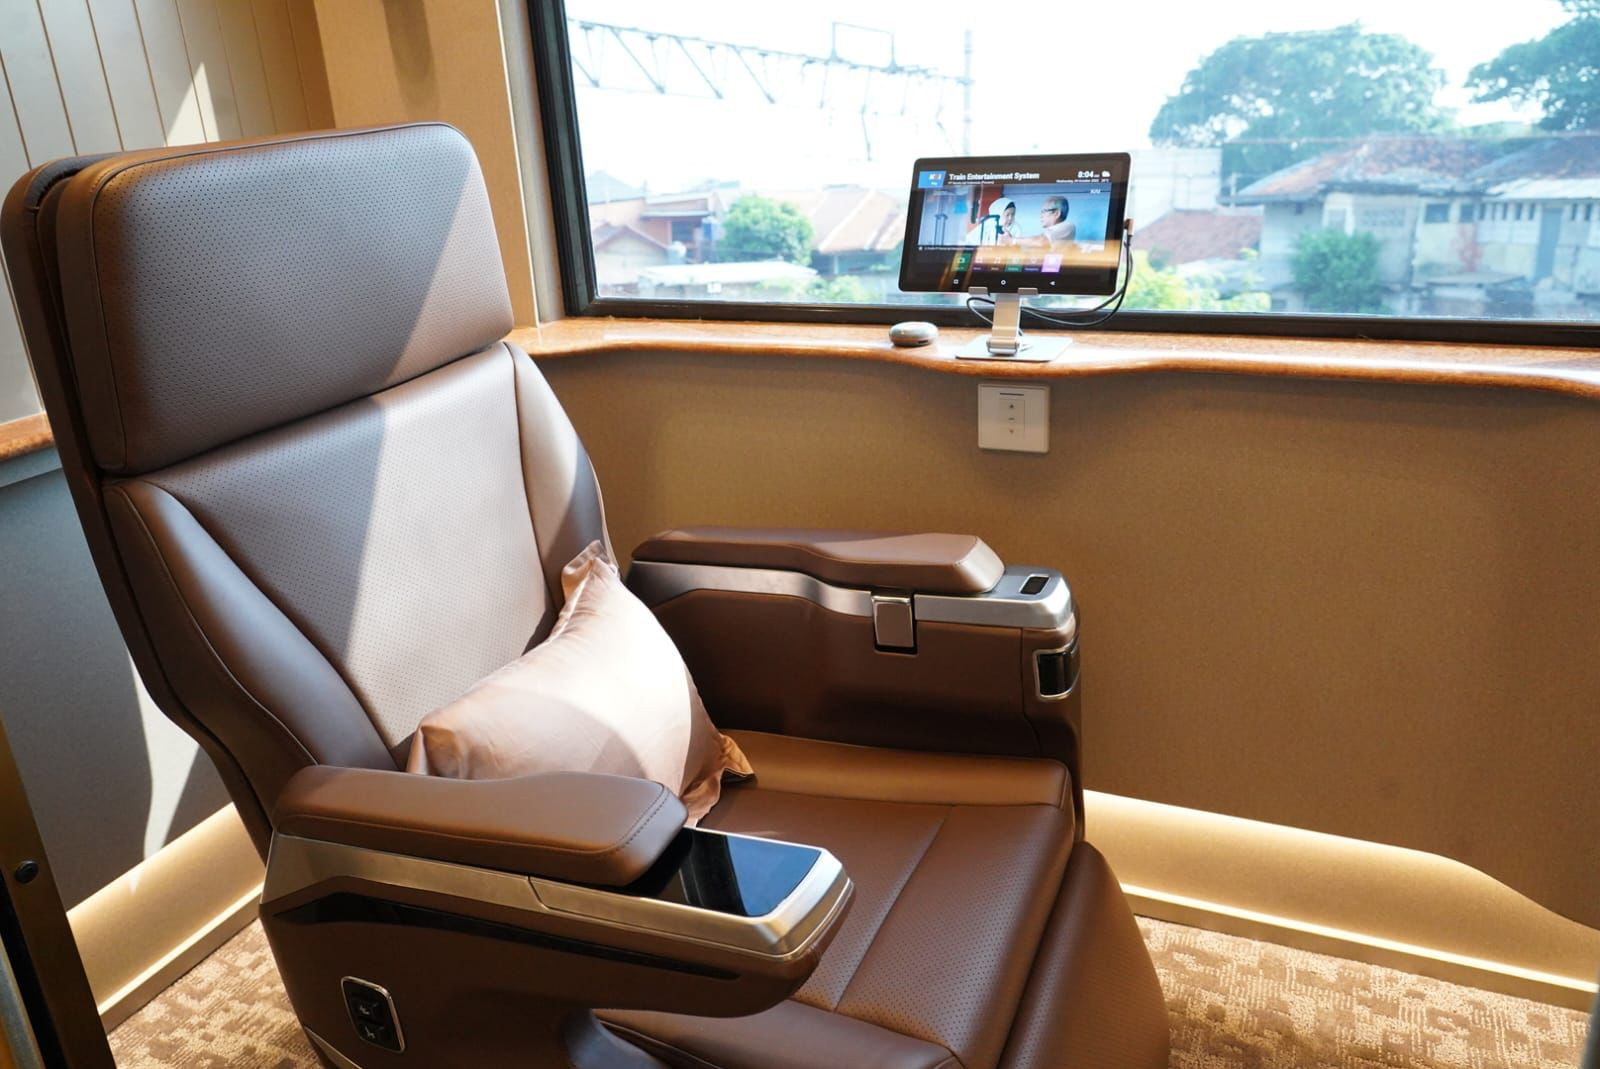 Cek 10 Kemewahan Kereta Suite Class Compartment, Harga Tiket Masih Rp 1.950.000